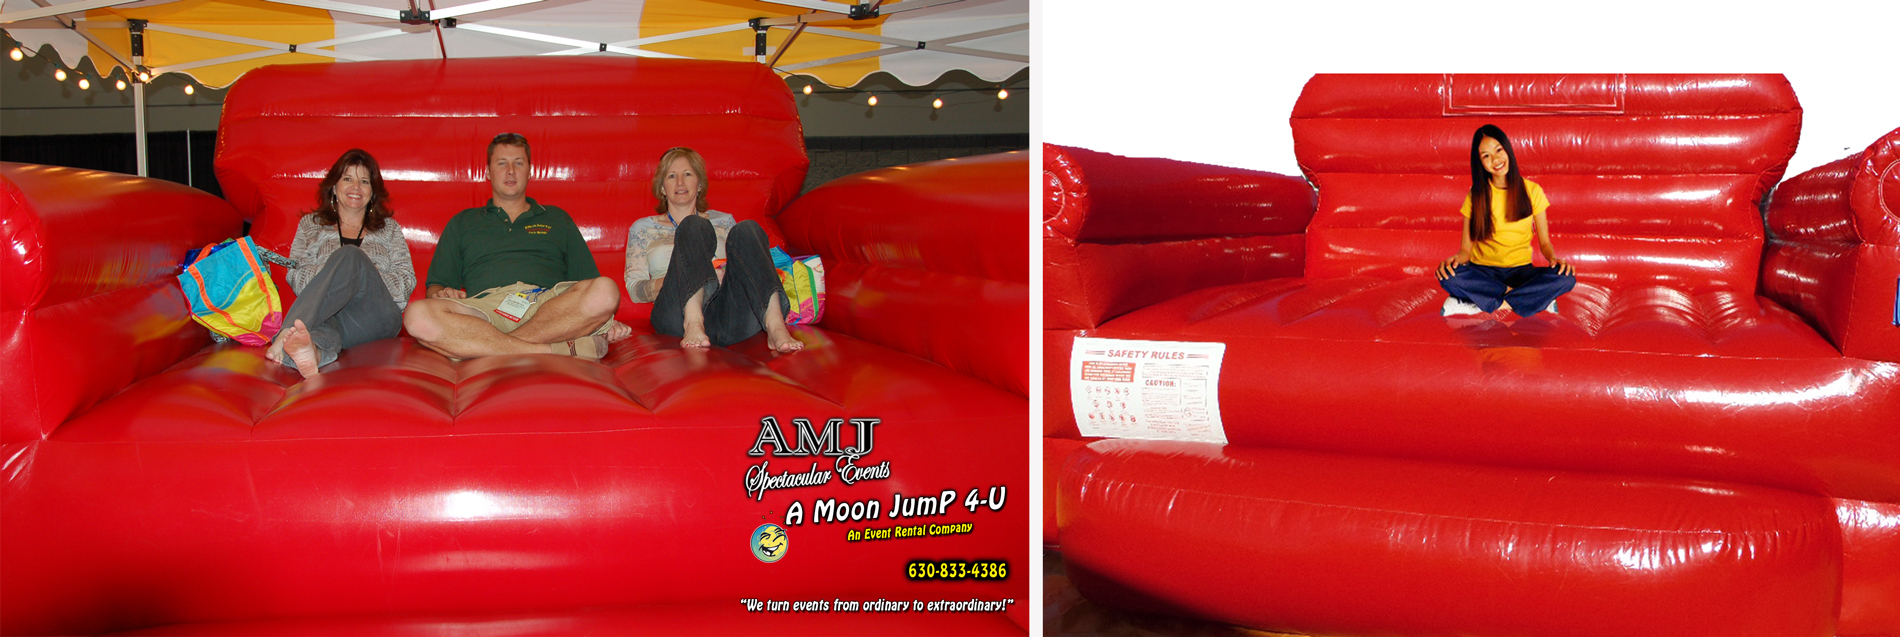 AMJ-College-EVENT-Rentals-Big-Red-Chair-Rentals